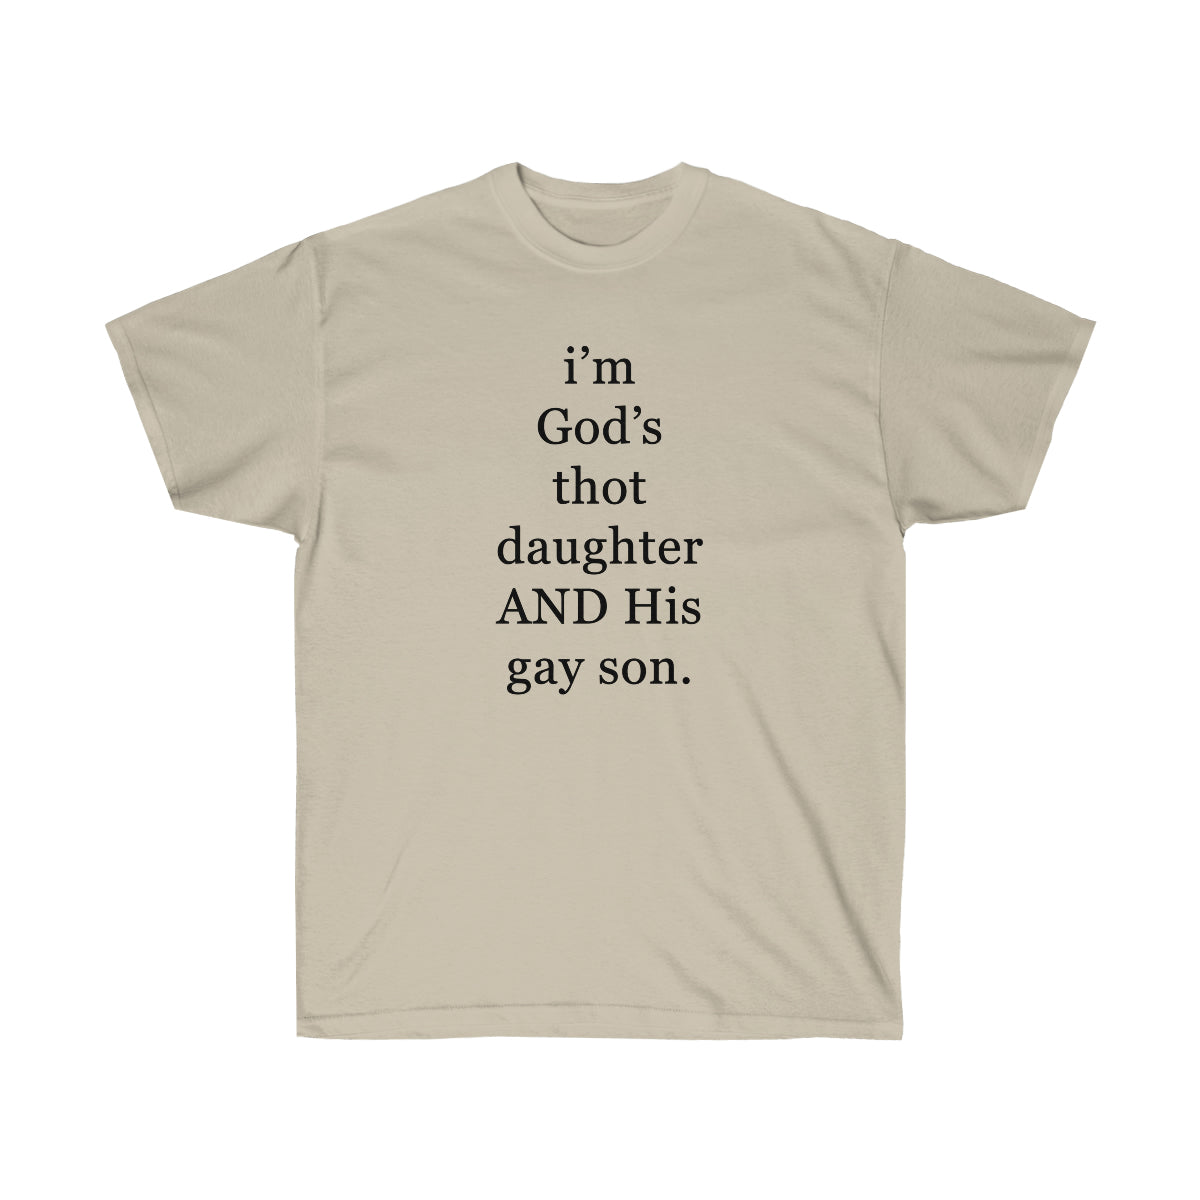 GOD'S THOT DAUGHTER